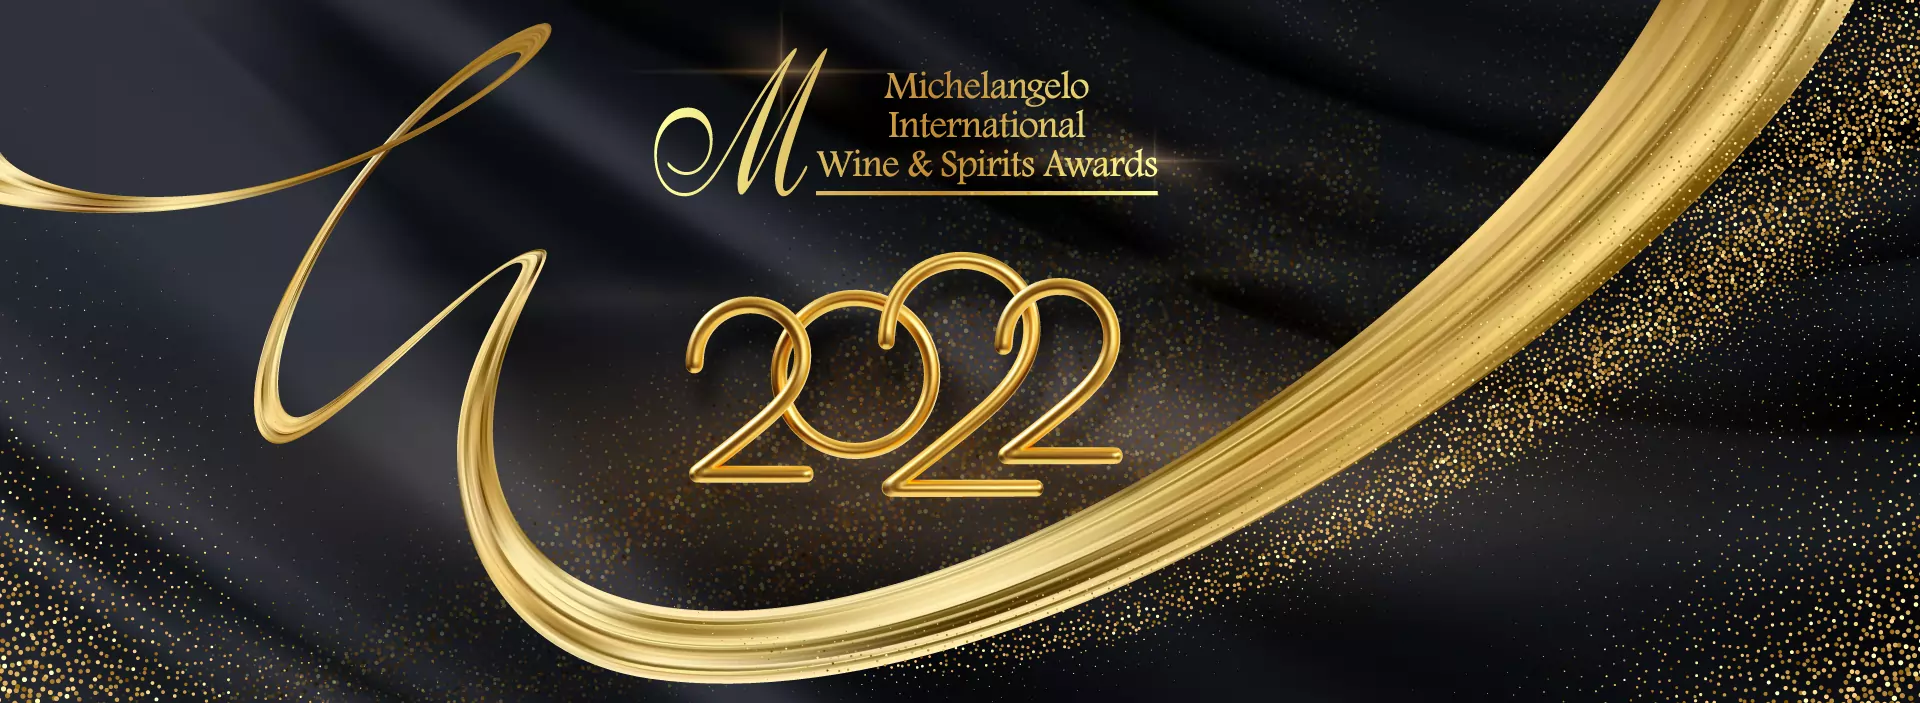 Michelangelo International Wine & Spirits Awards 2022 logo